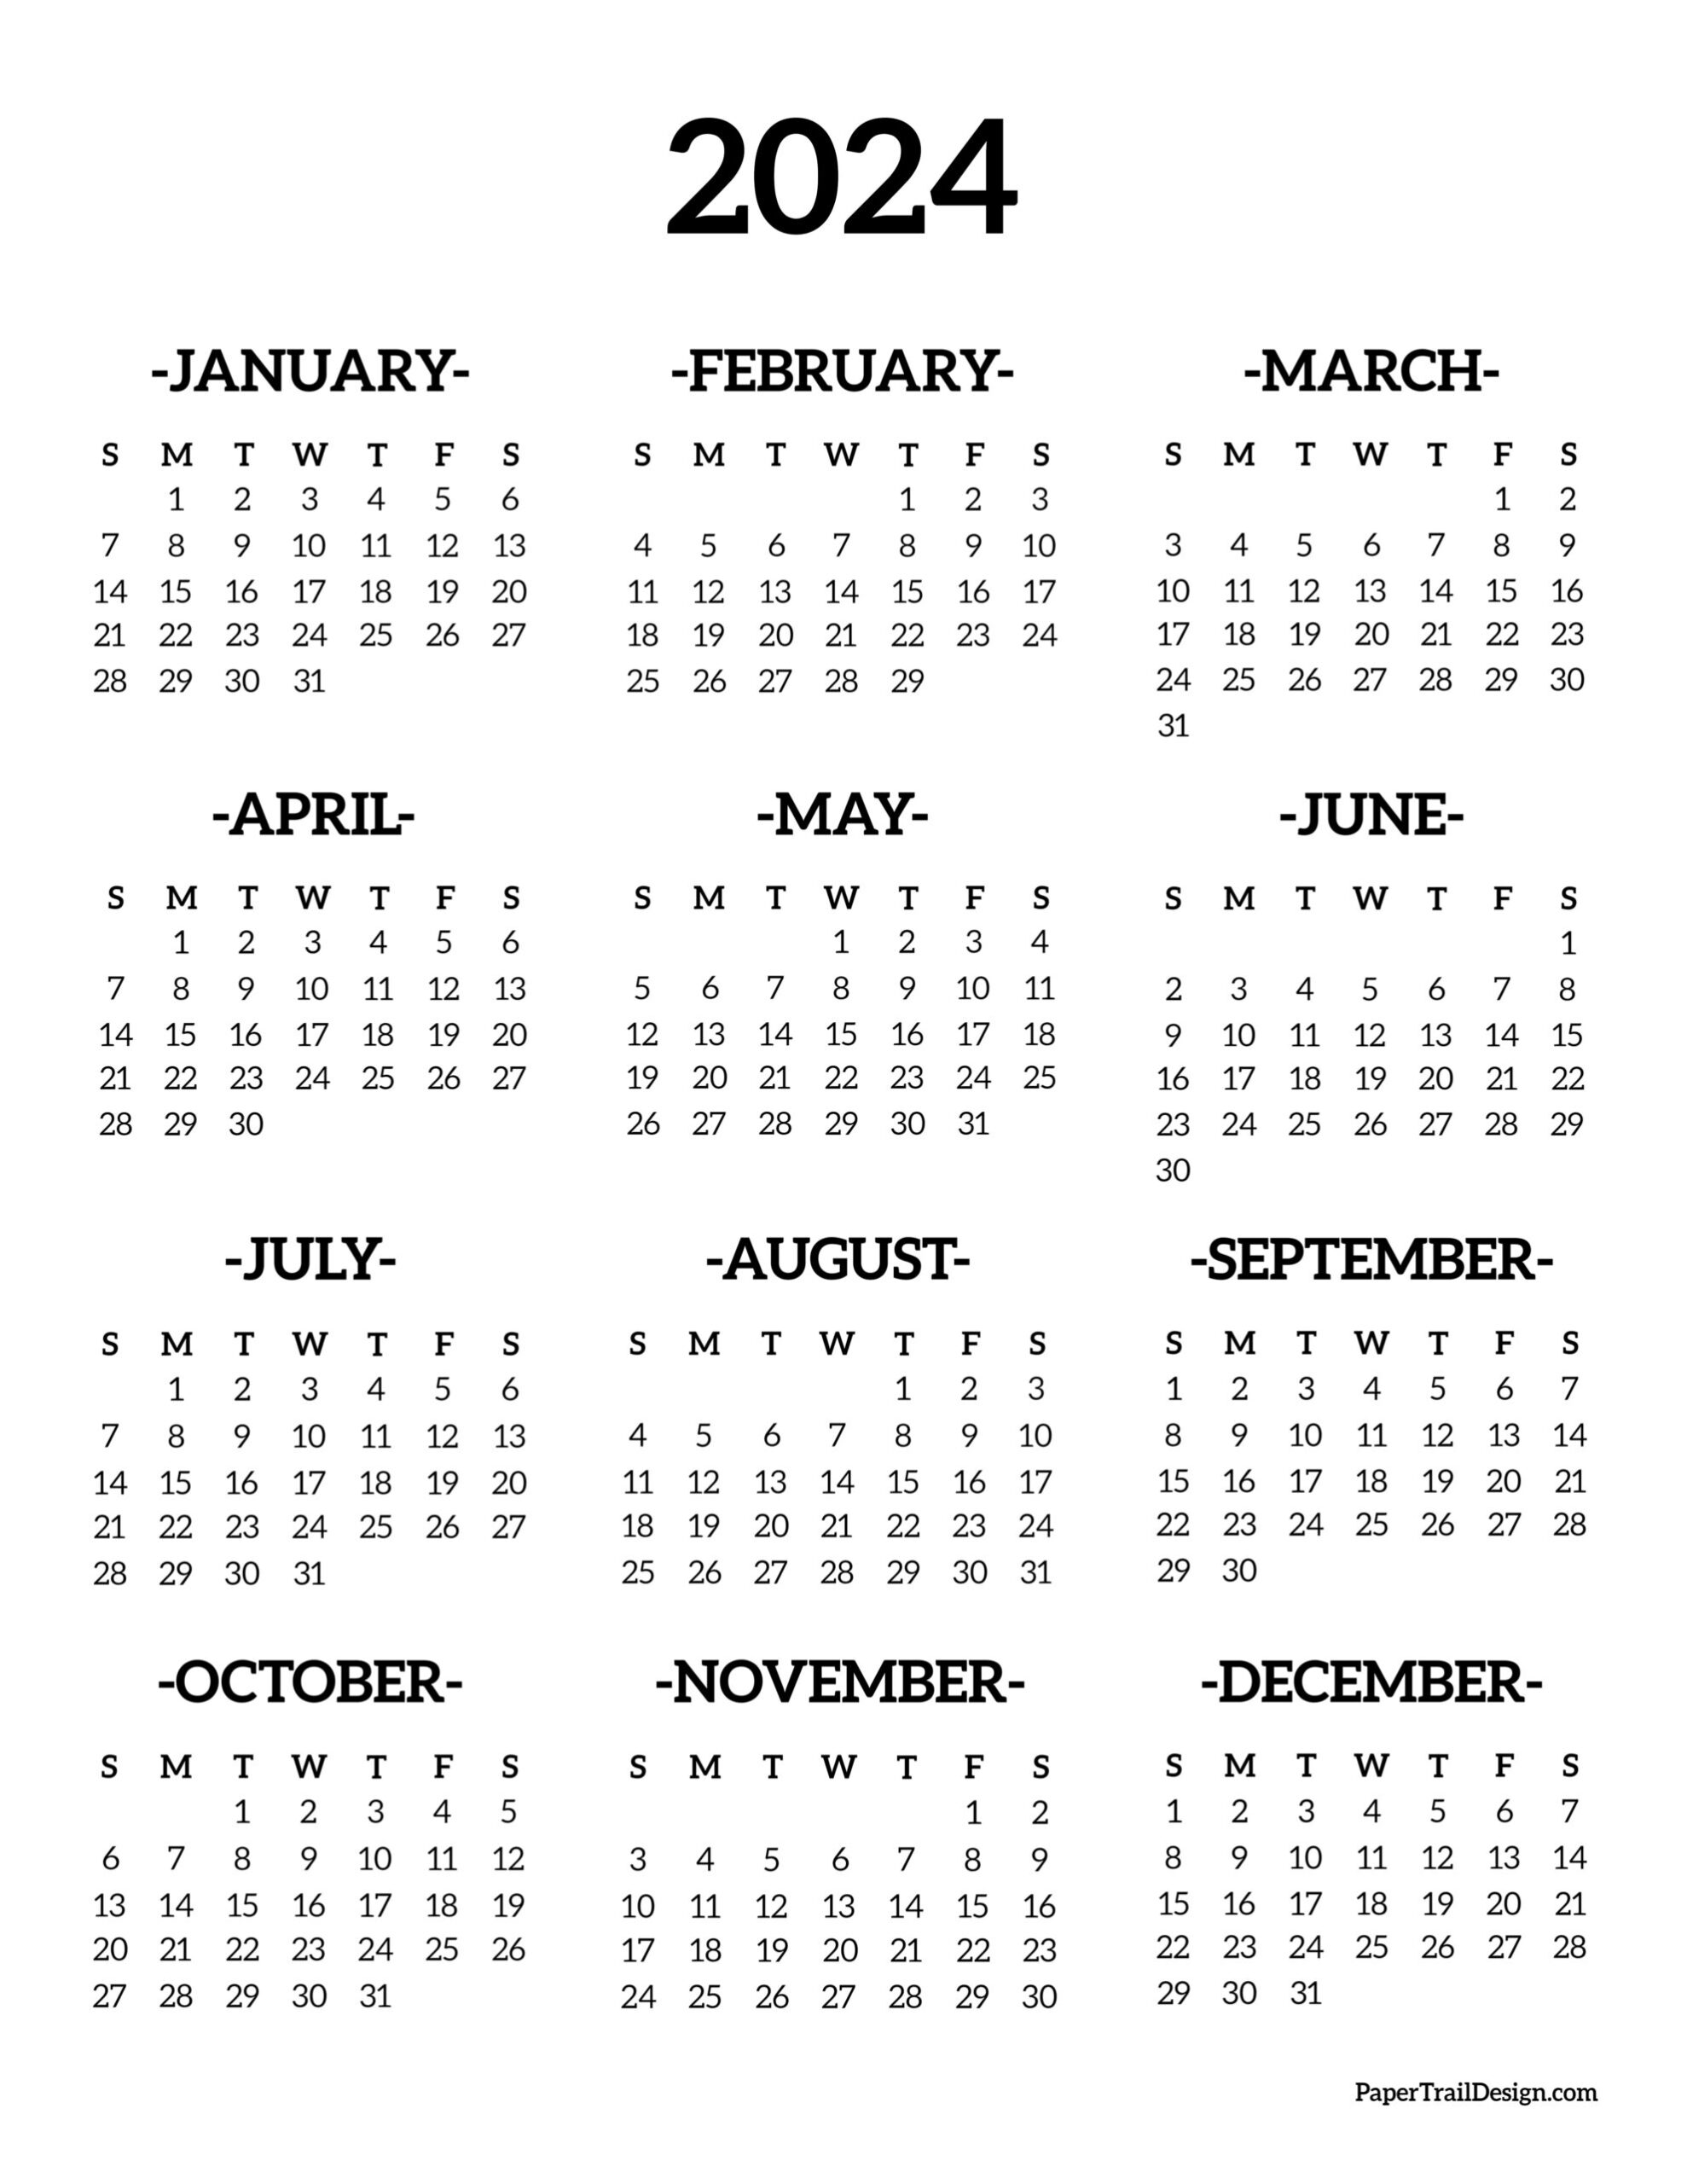 Calendar 2024 Printable One Page - Paper Trail Design for Free 2024 Printable Calendar